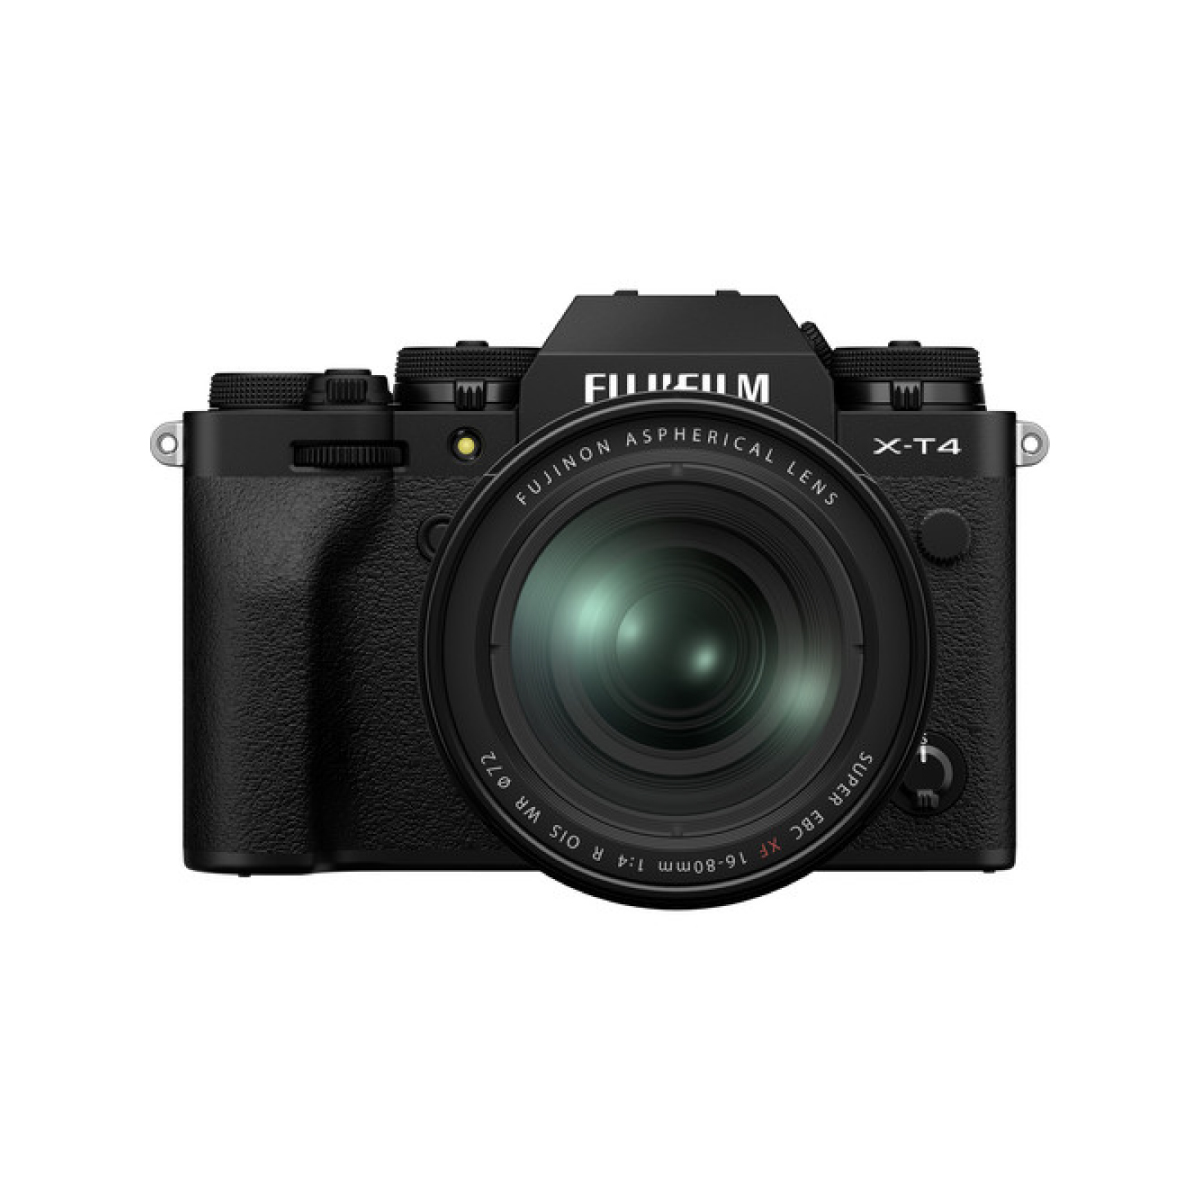 Fujifilm X-T4 26 MP Mirrorless Camera Body with XF16-80mm Lens – Black (1)